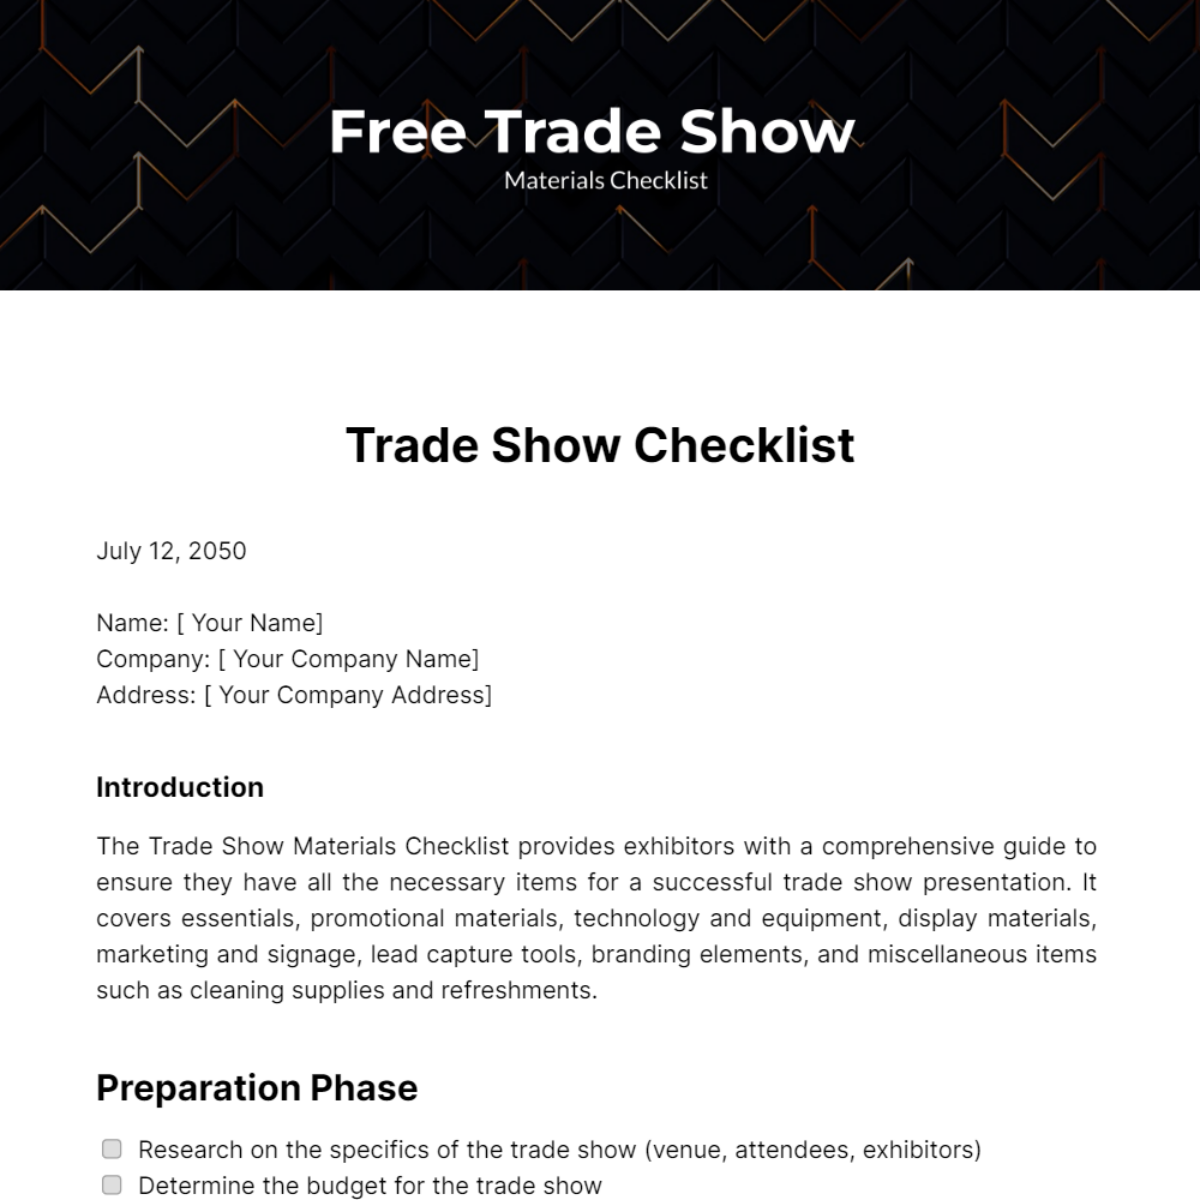 Free Trade Show Materials Checklist Template